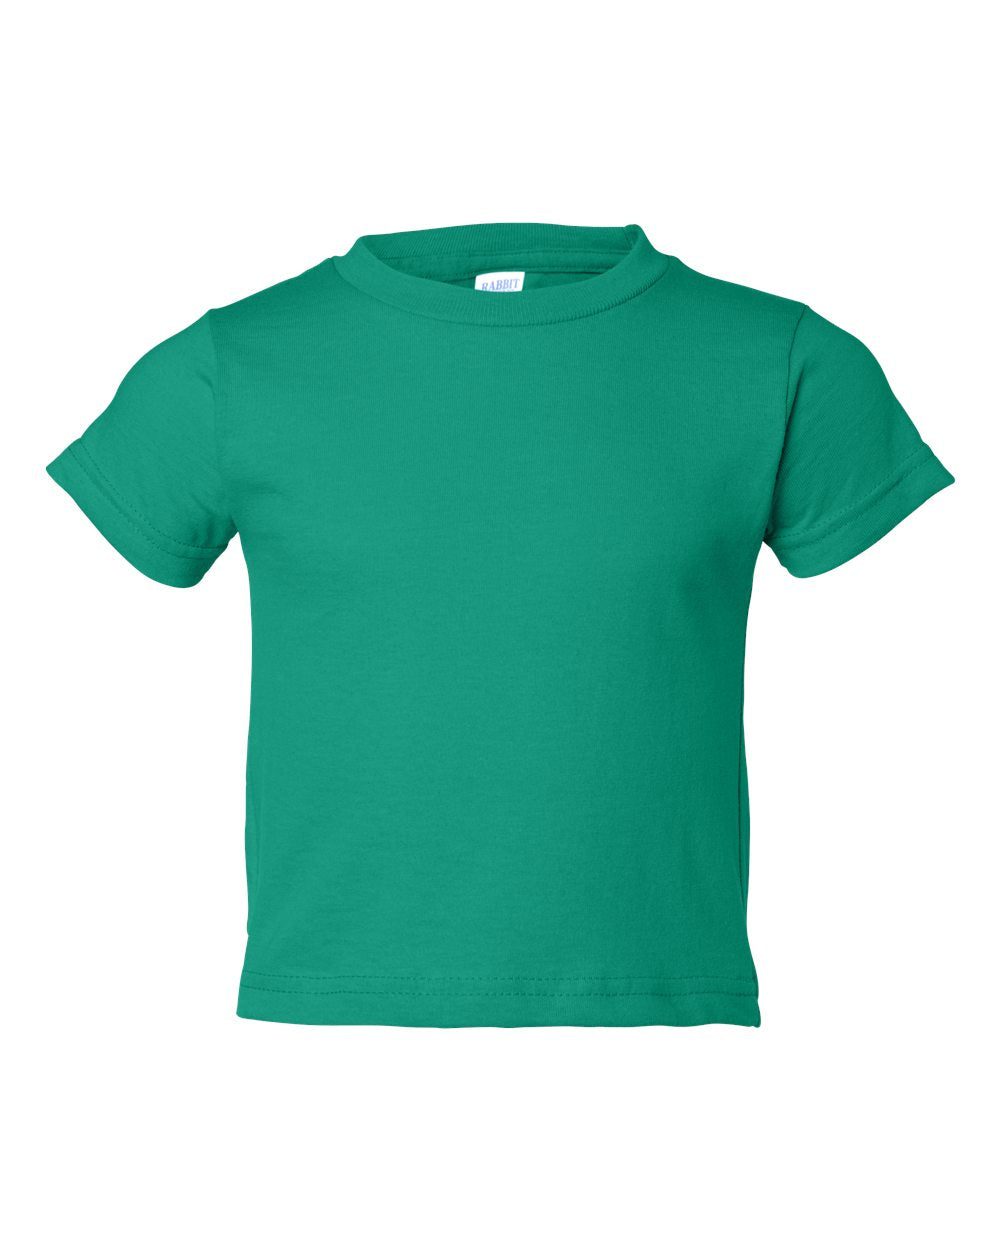 Toddler Jersey T-shirt, 100% Cotton, Kelly